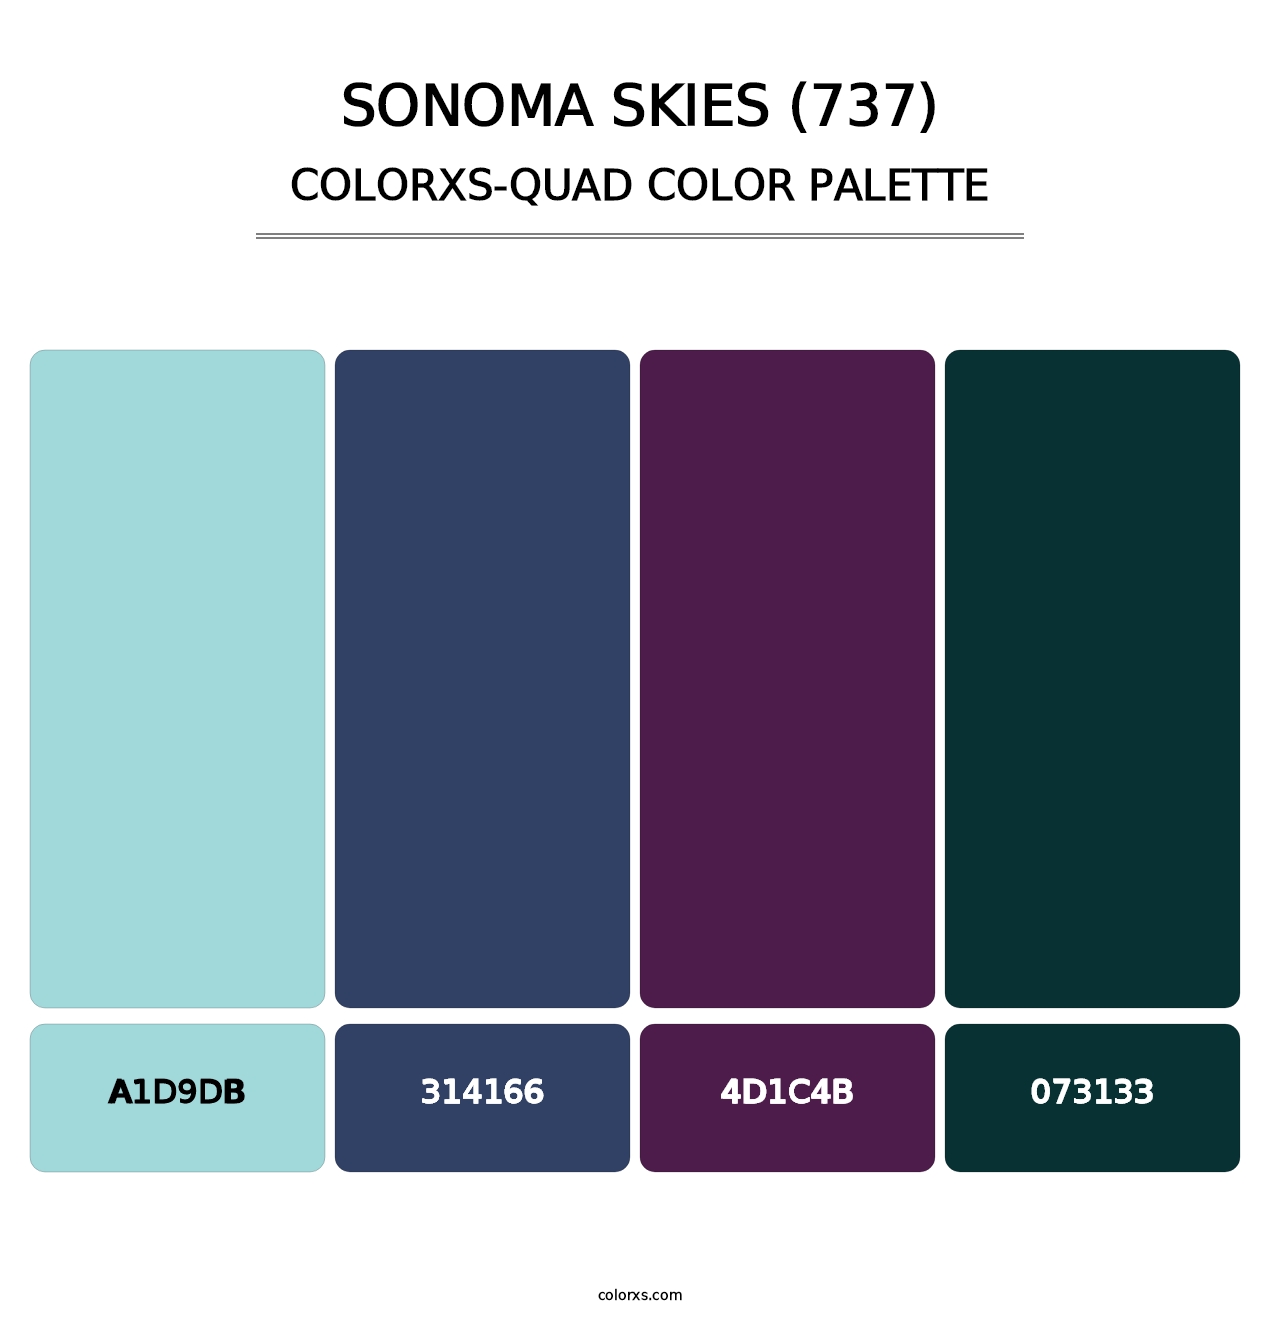 Sonoma Skies (737) - Colorxs Quad Palette